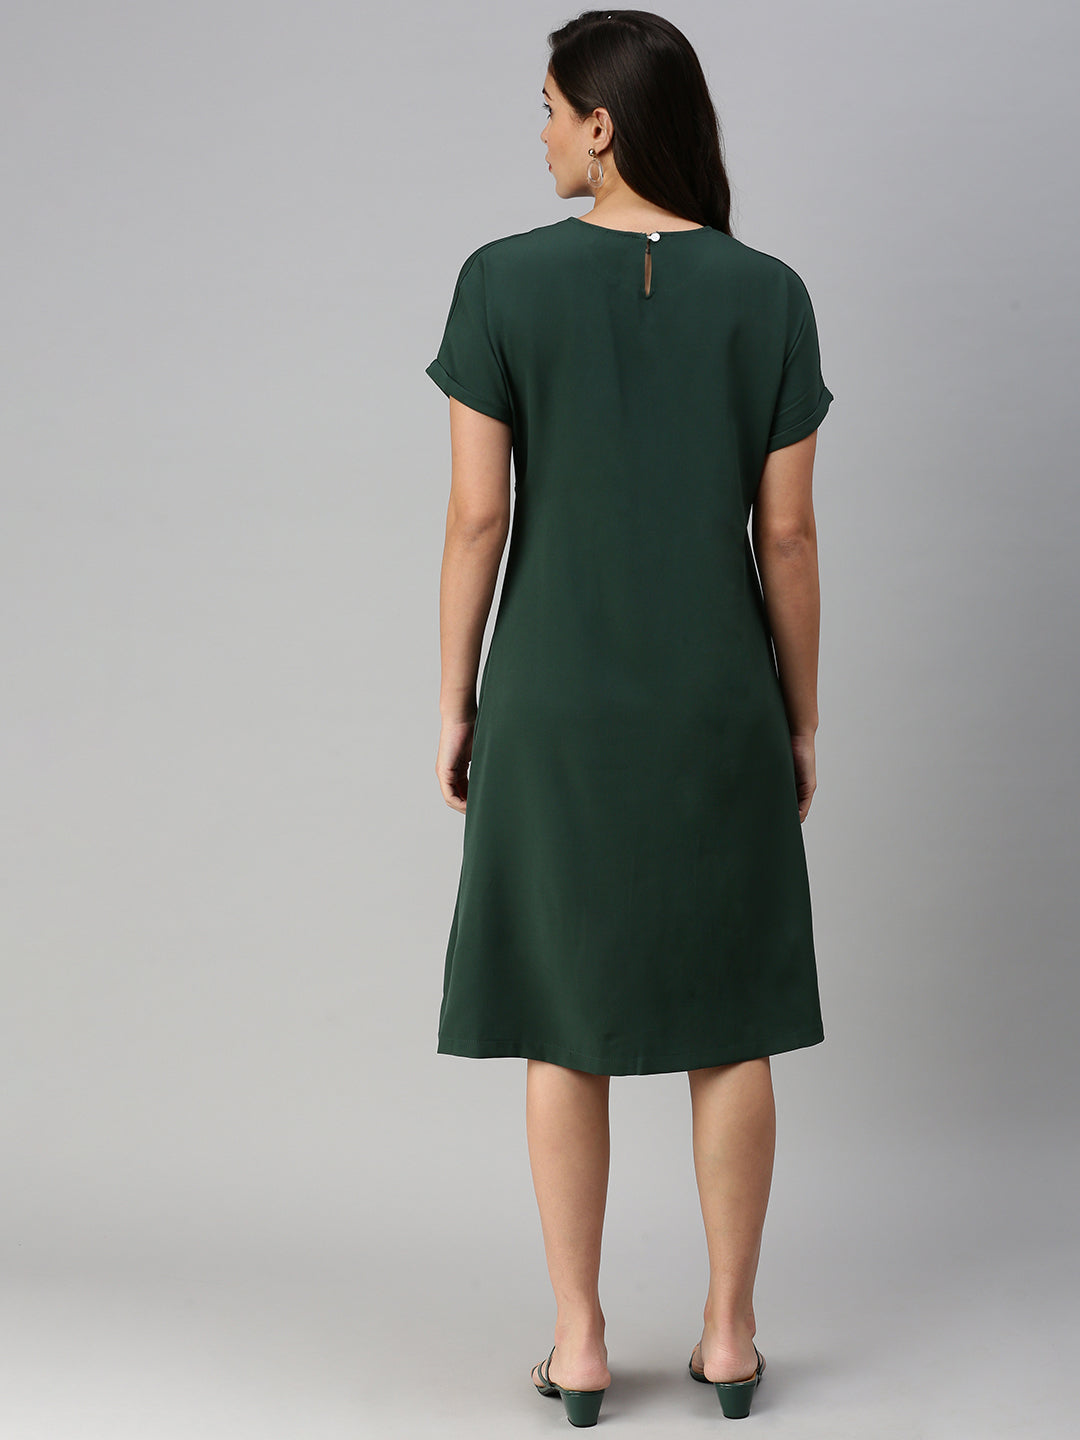 Women Solid Sheath Green Dress